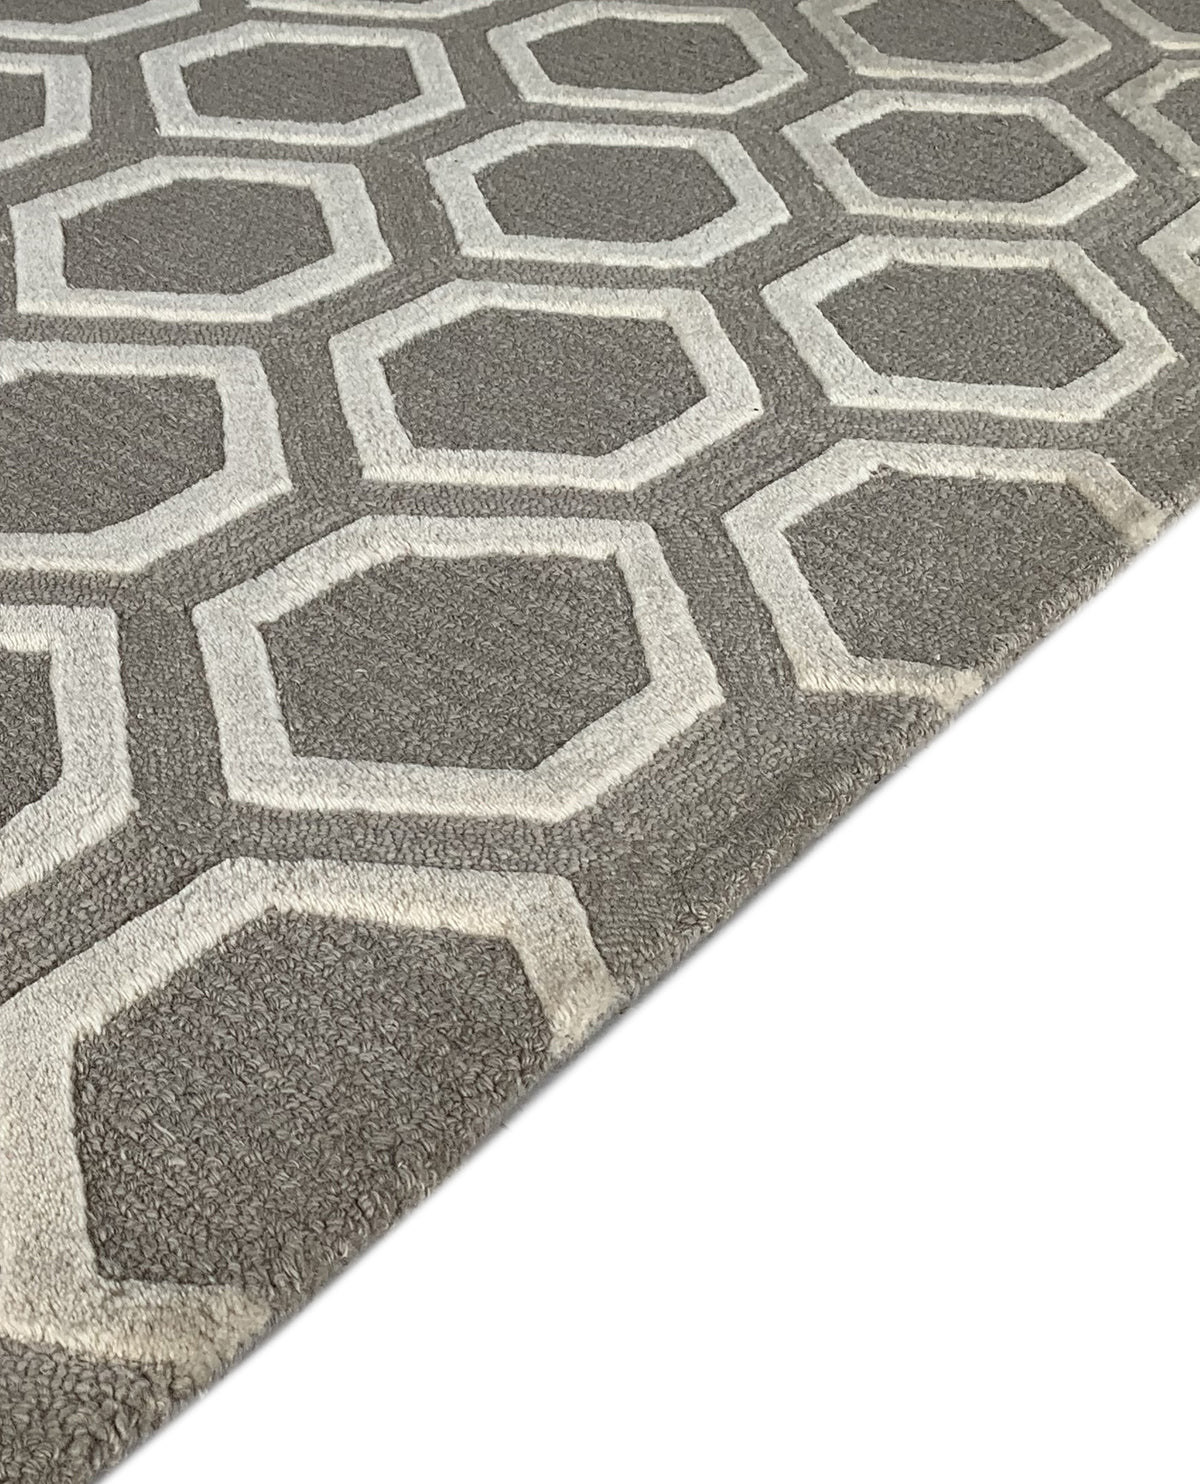 Rugslane Brown Color Trellis Design 100% New Zealand Wool Handmade Modern Carpet 5ft x 8ft